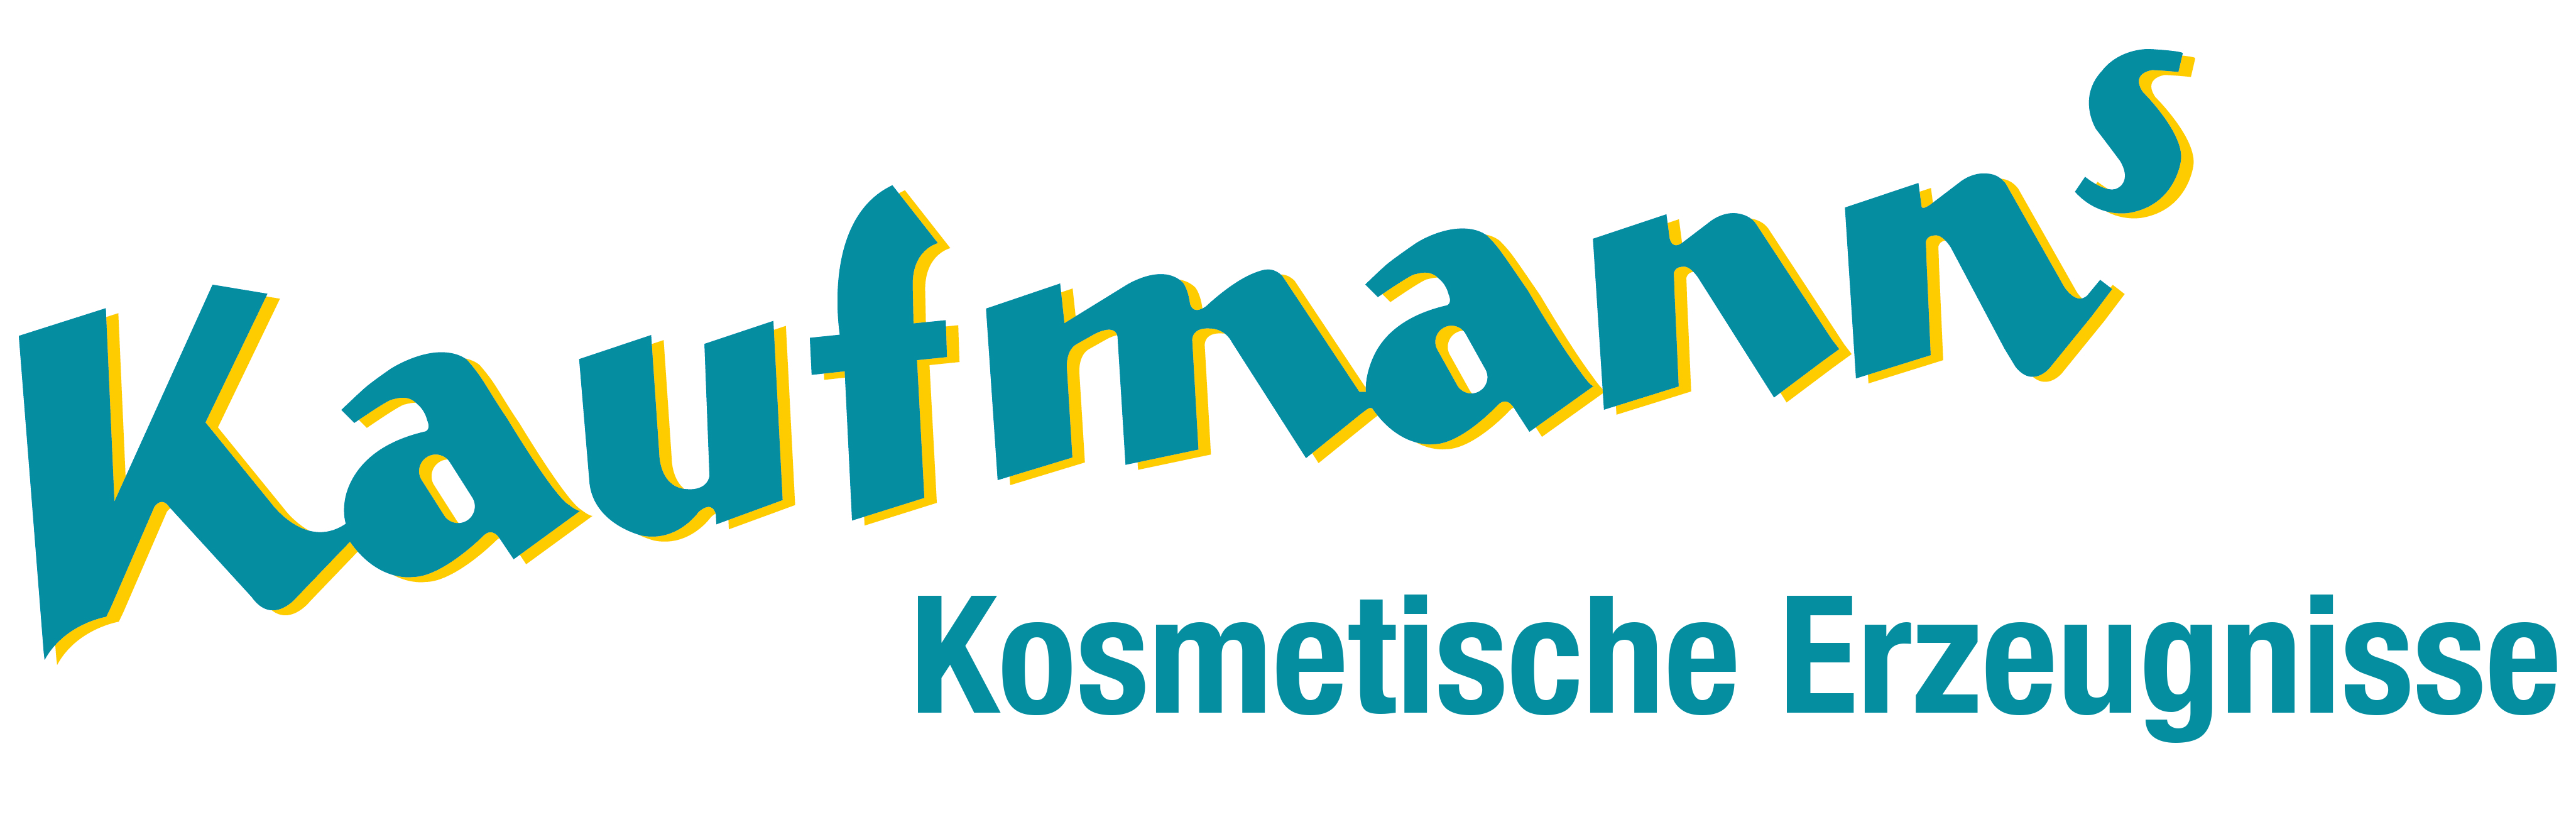 Logo_KaufmannsCreme